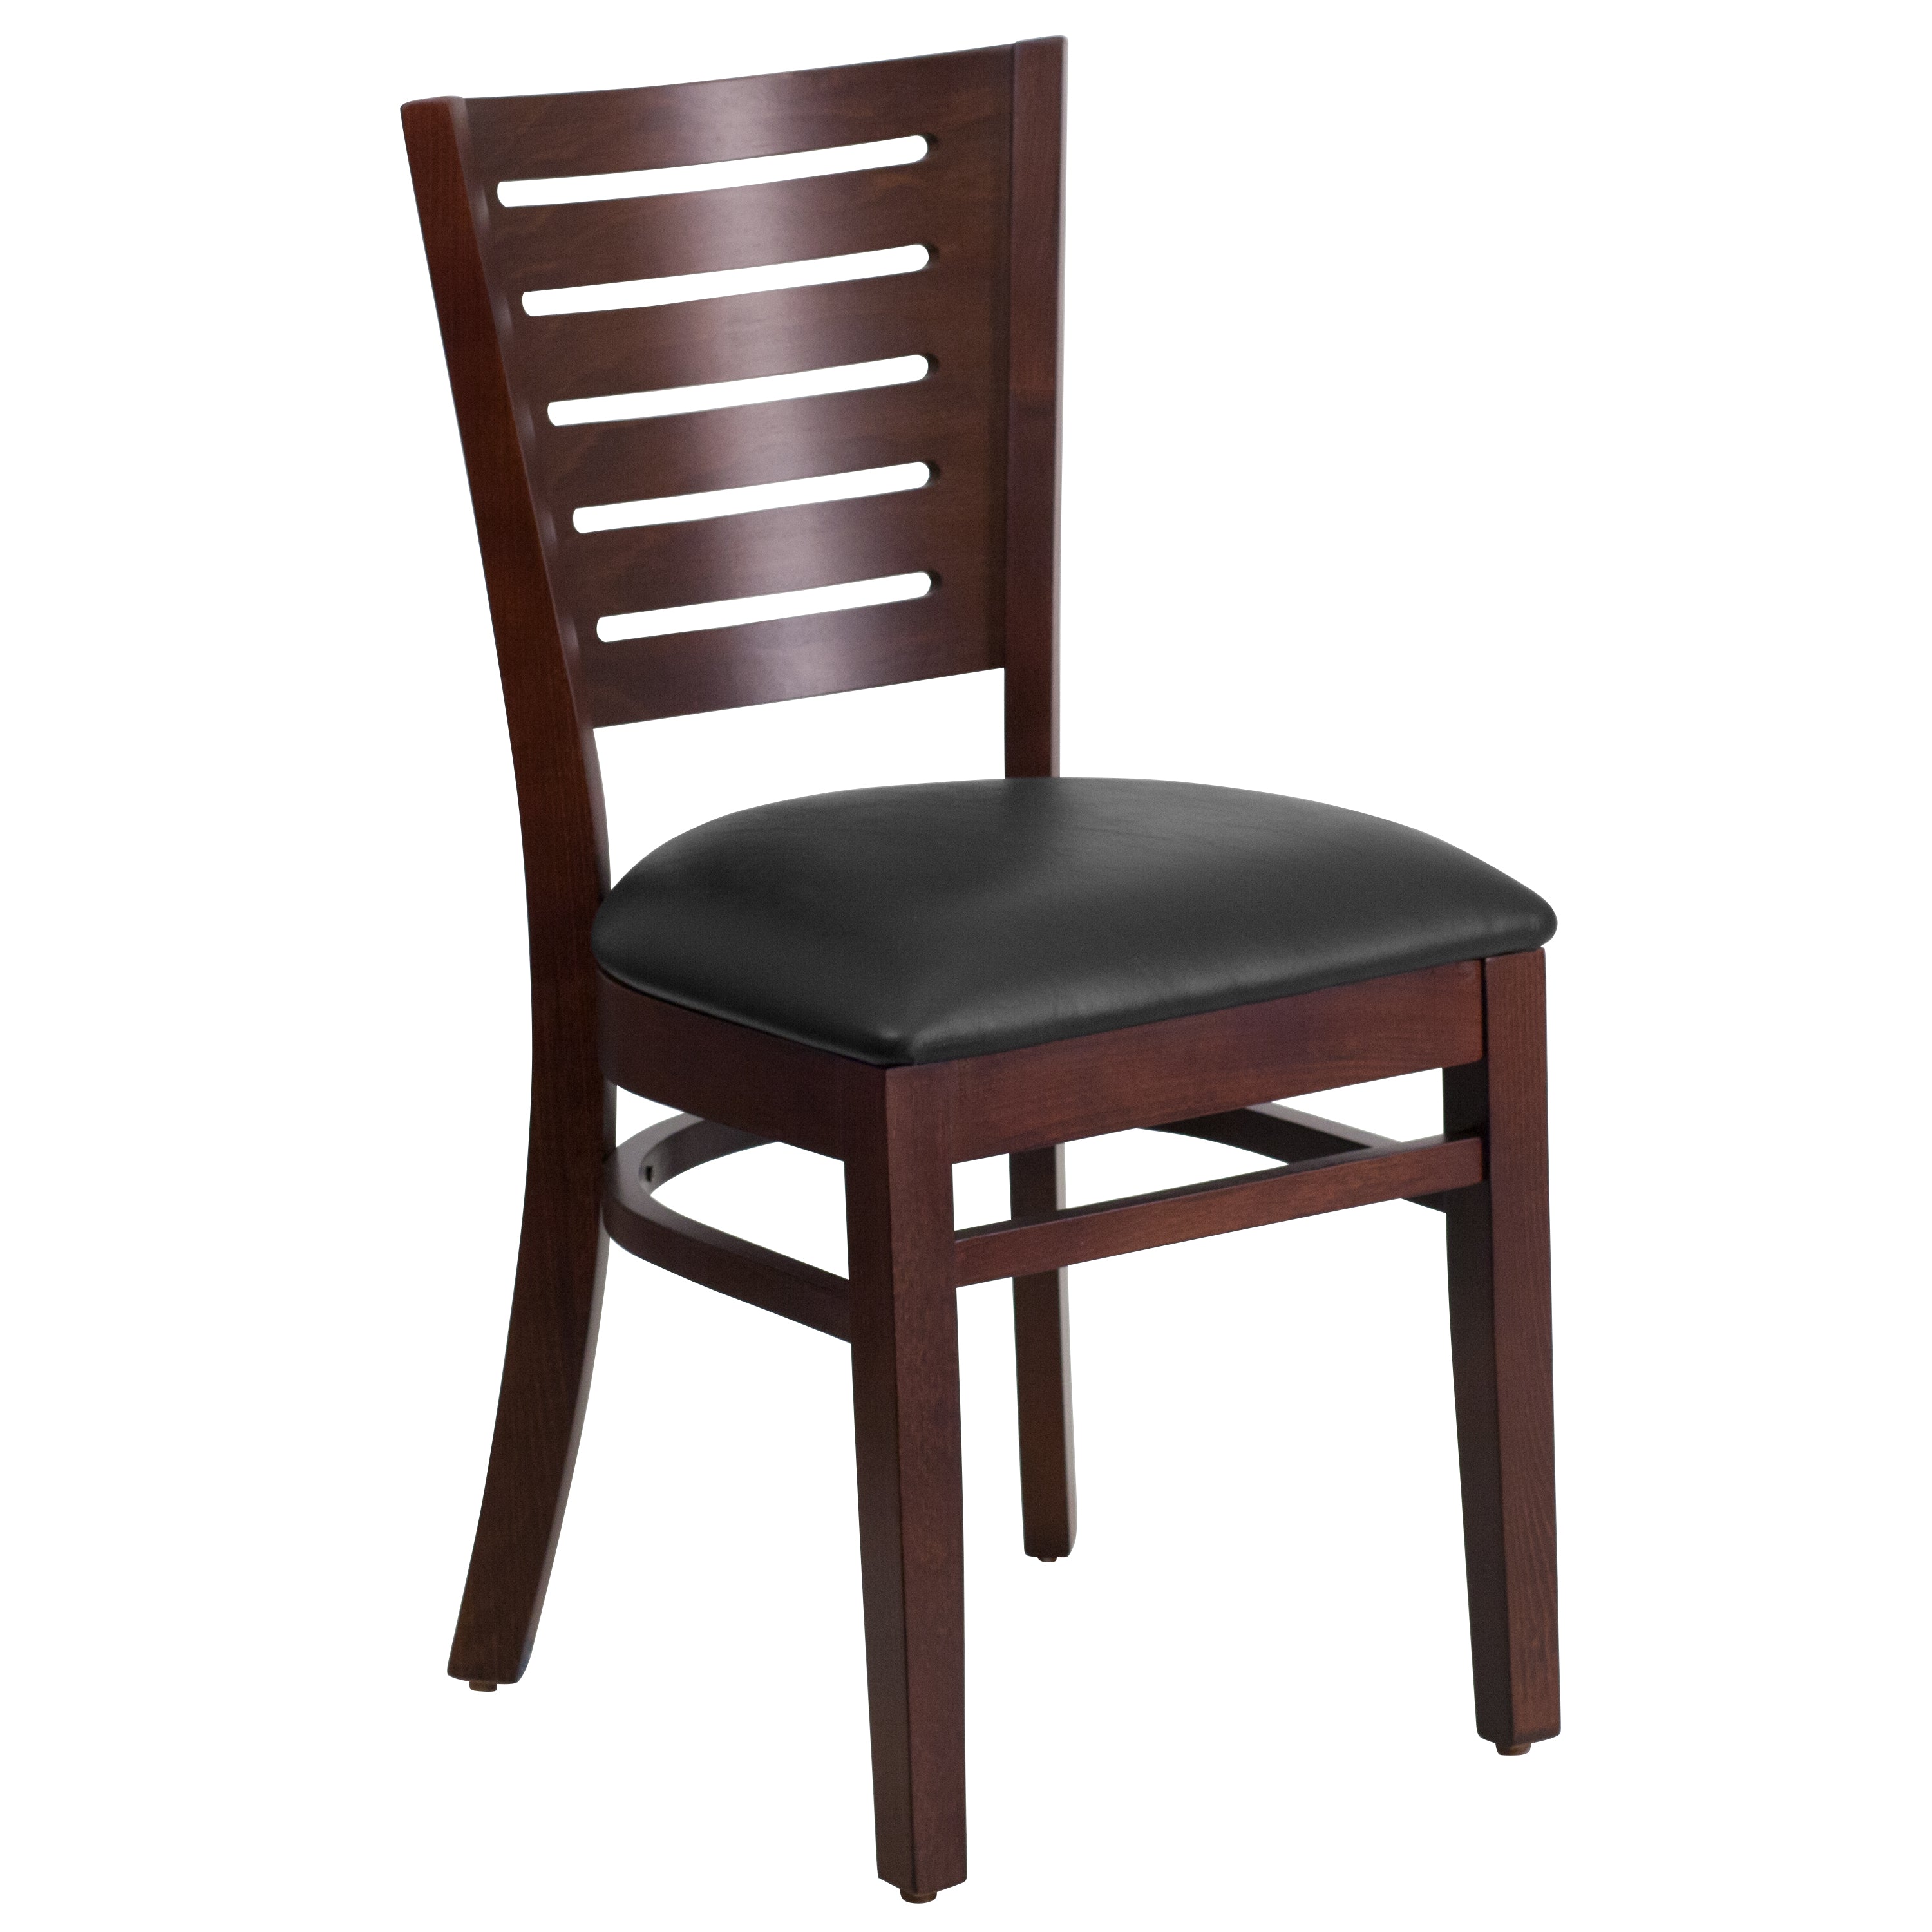 Slat Back Wooden Restaurant Chair-Restaurant Chair-Flash Furniture-Wall2Wall Furnishings